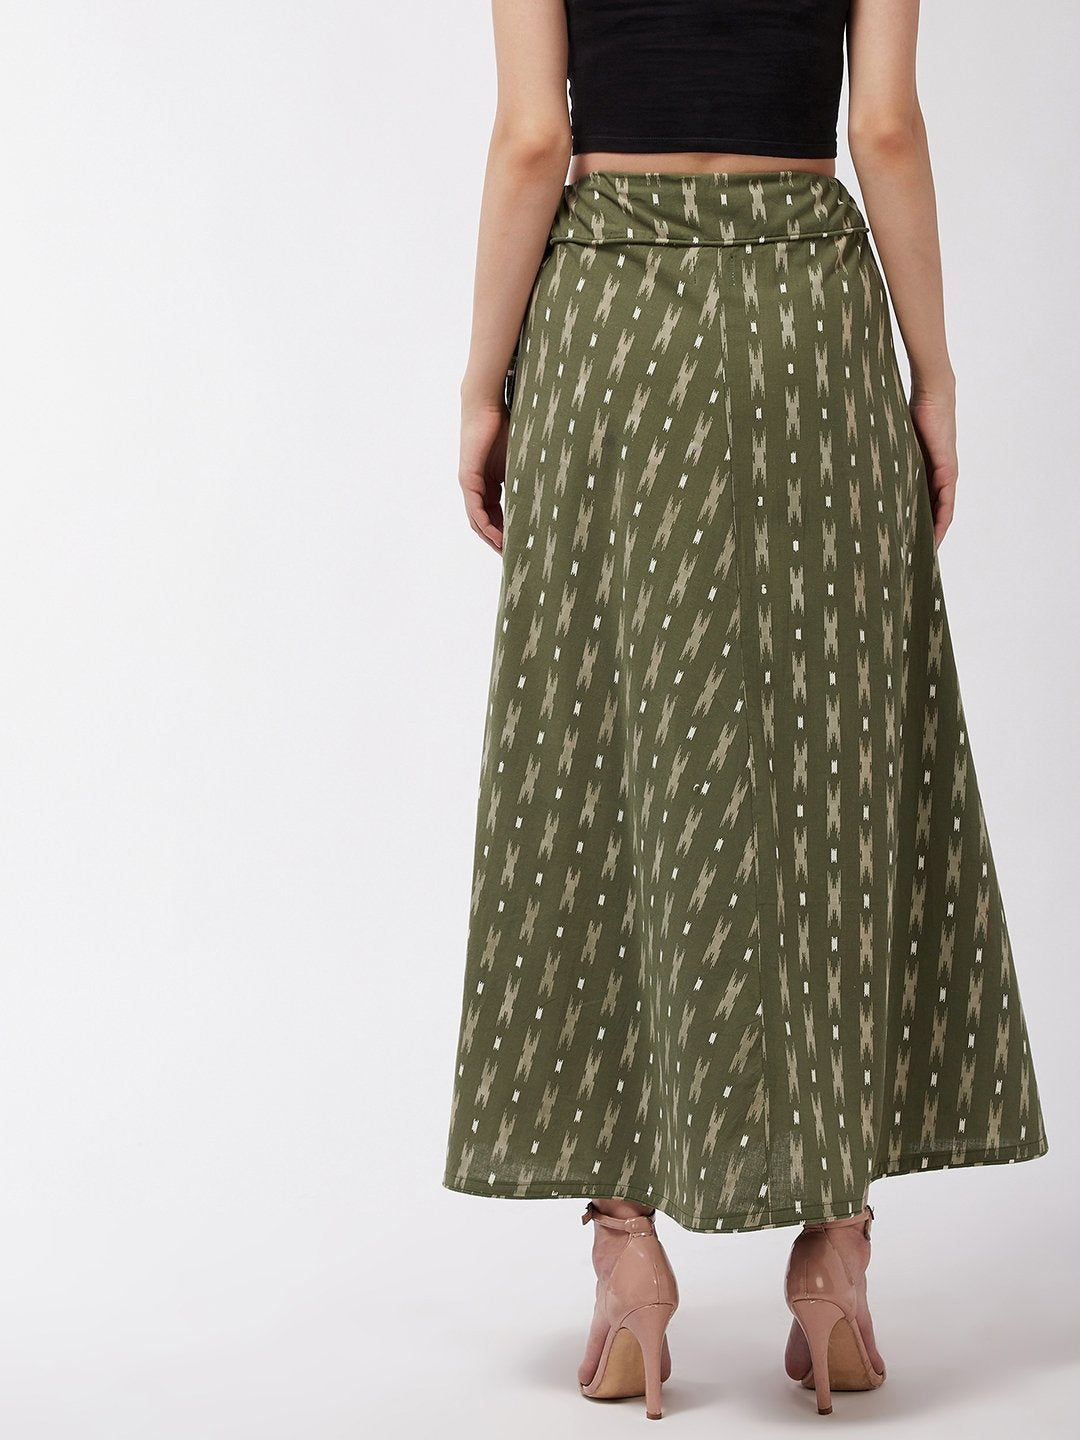 Moss Green Ikkat Skirt